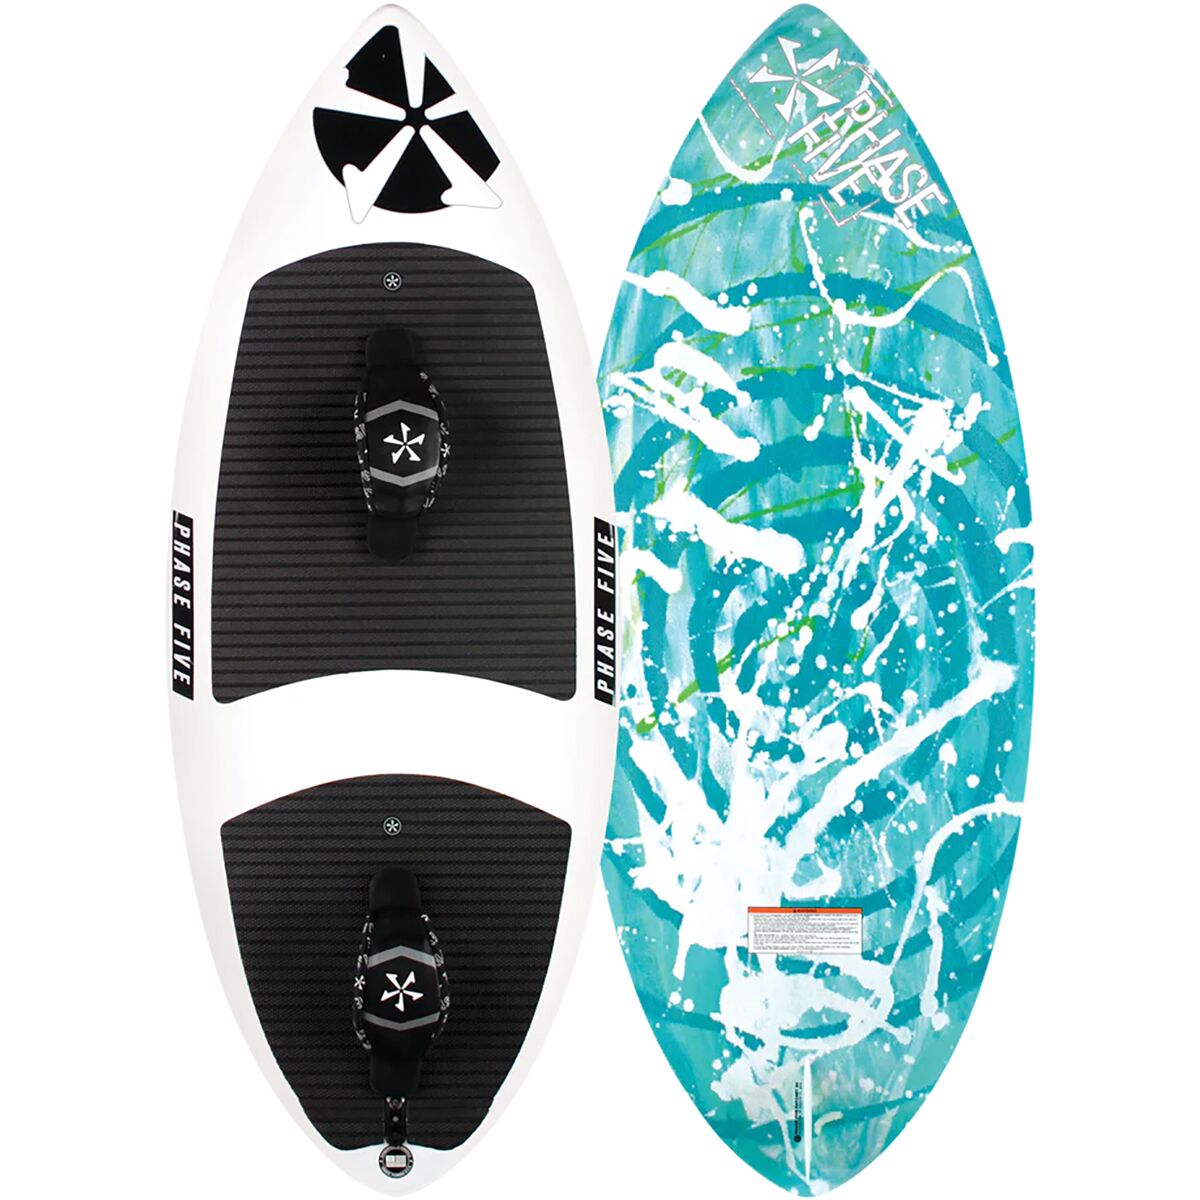 Phase5 Ratchet Strap Wake Surf Board